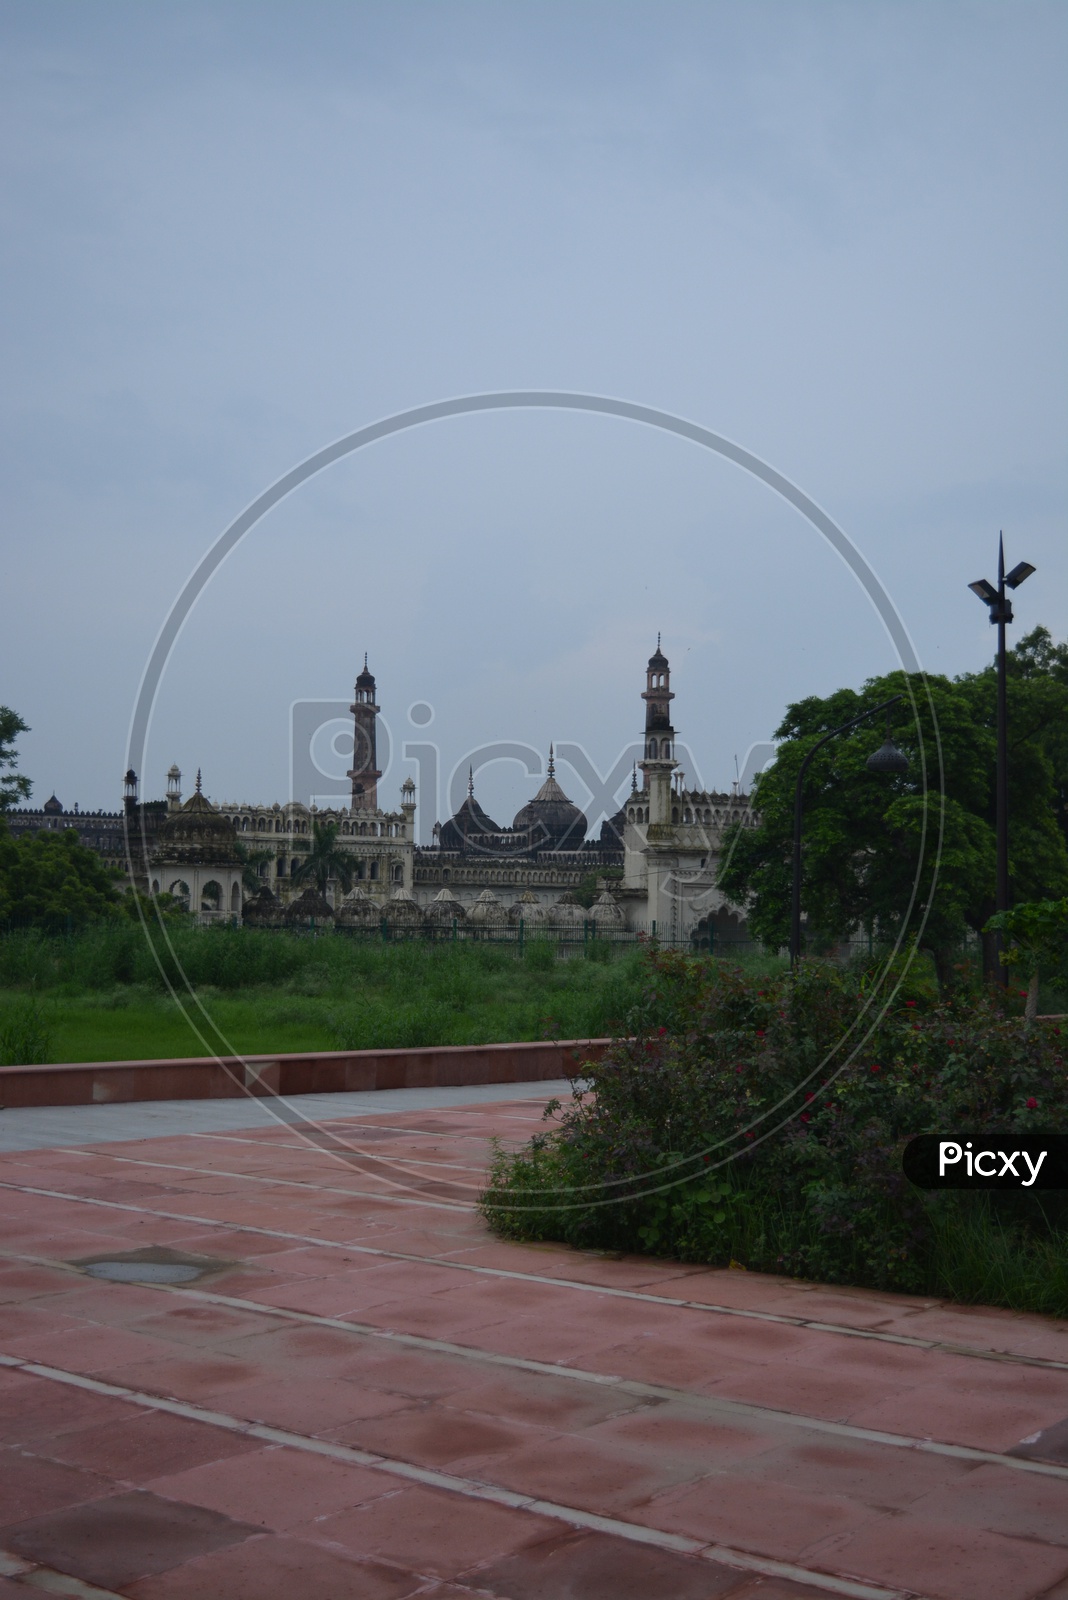 Imambara as seen from Tile wali Masjid, Lucknow